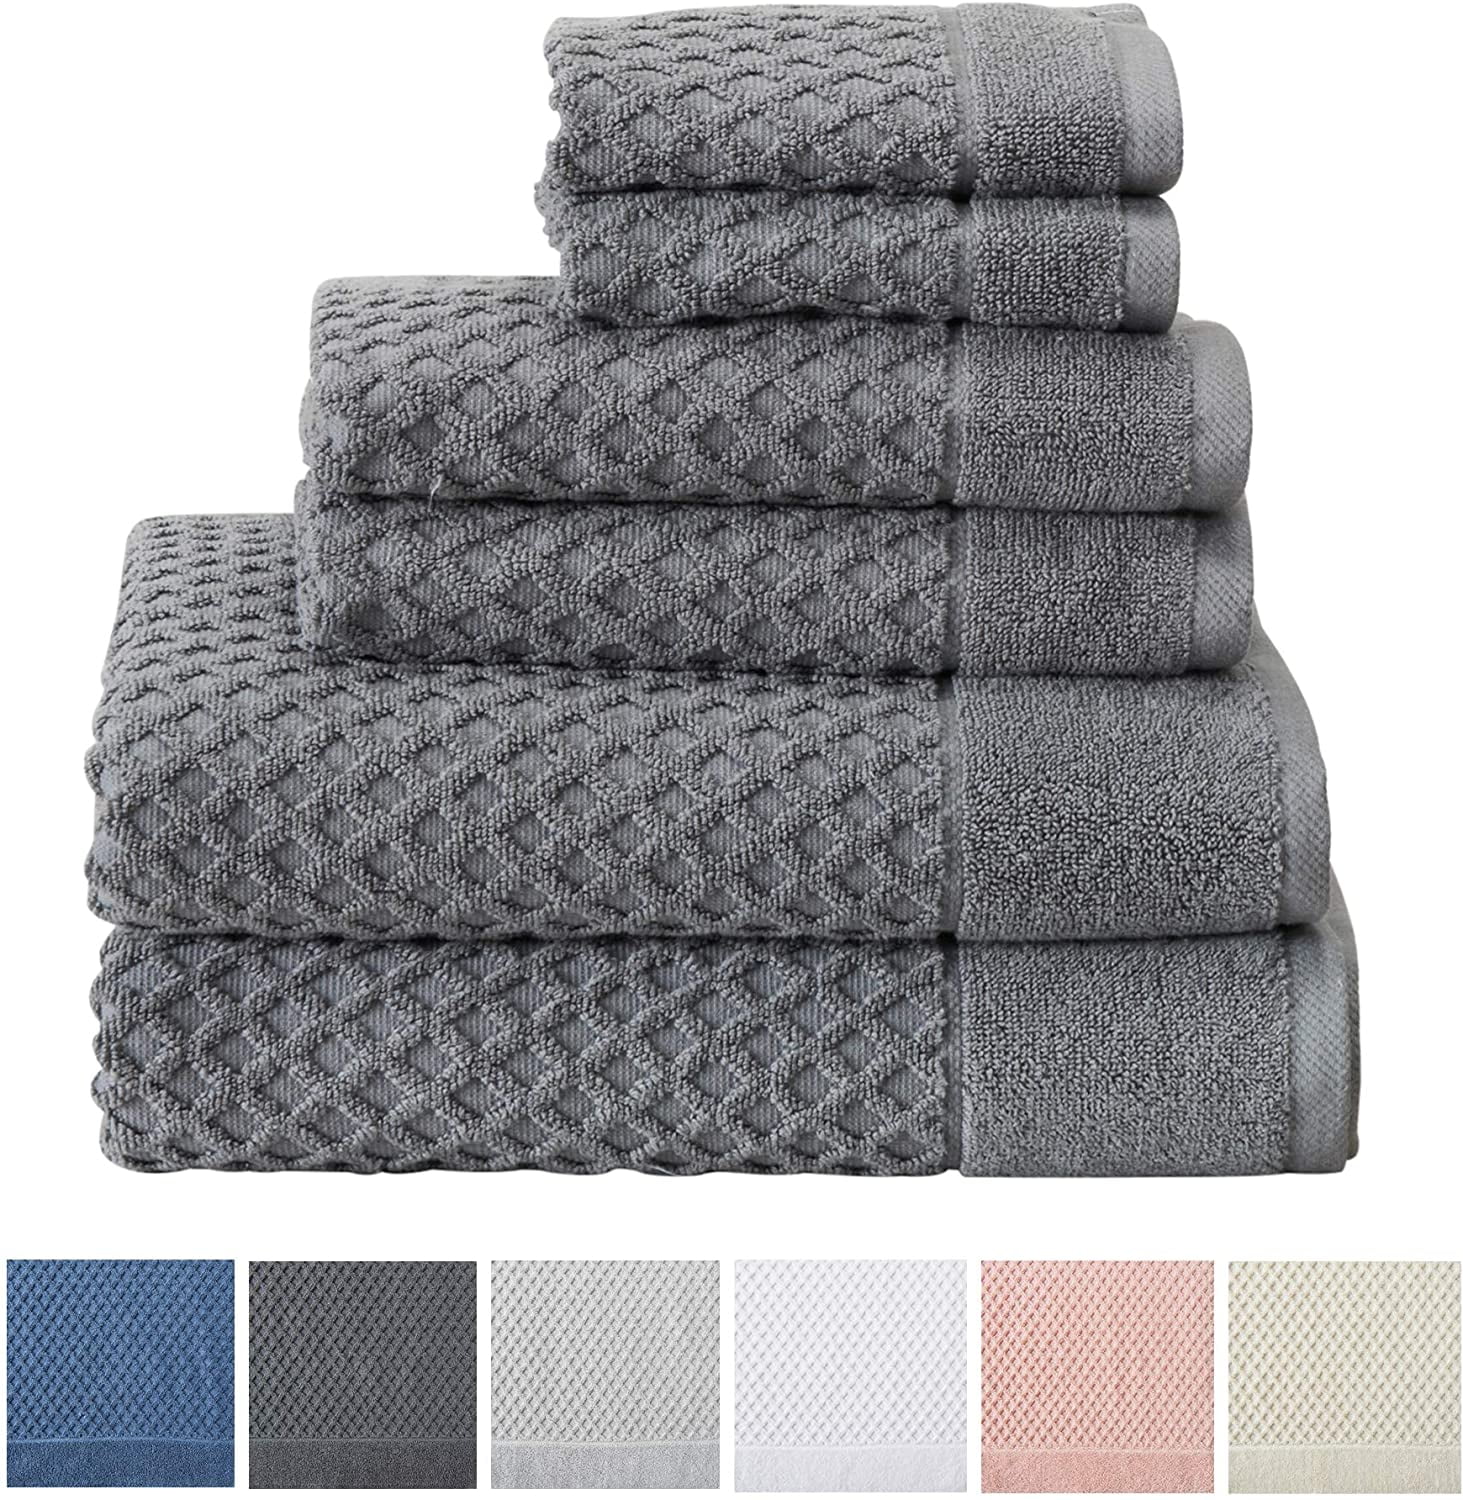 Market & Place Turkish Cotton Luxury 6-Pack Hand Towel Set Light Grey